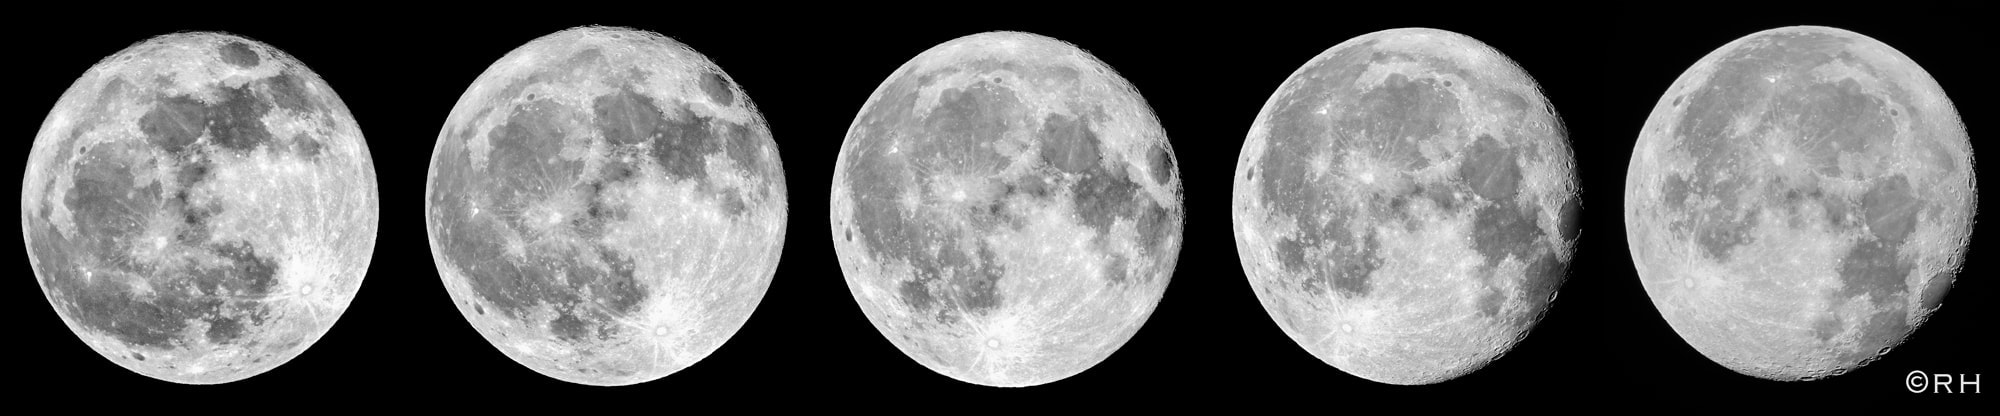 lunar rotation through the night sky, images by Rick Hemi